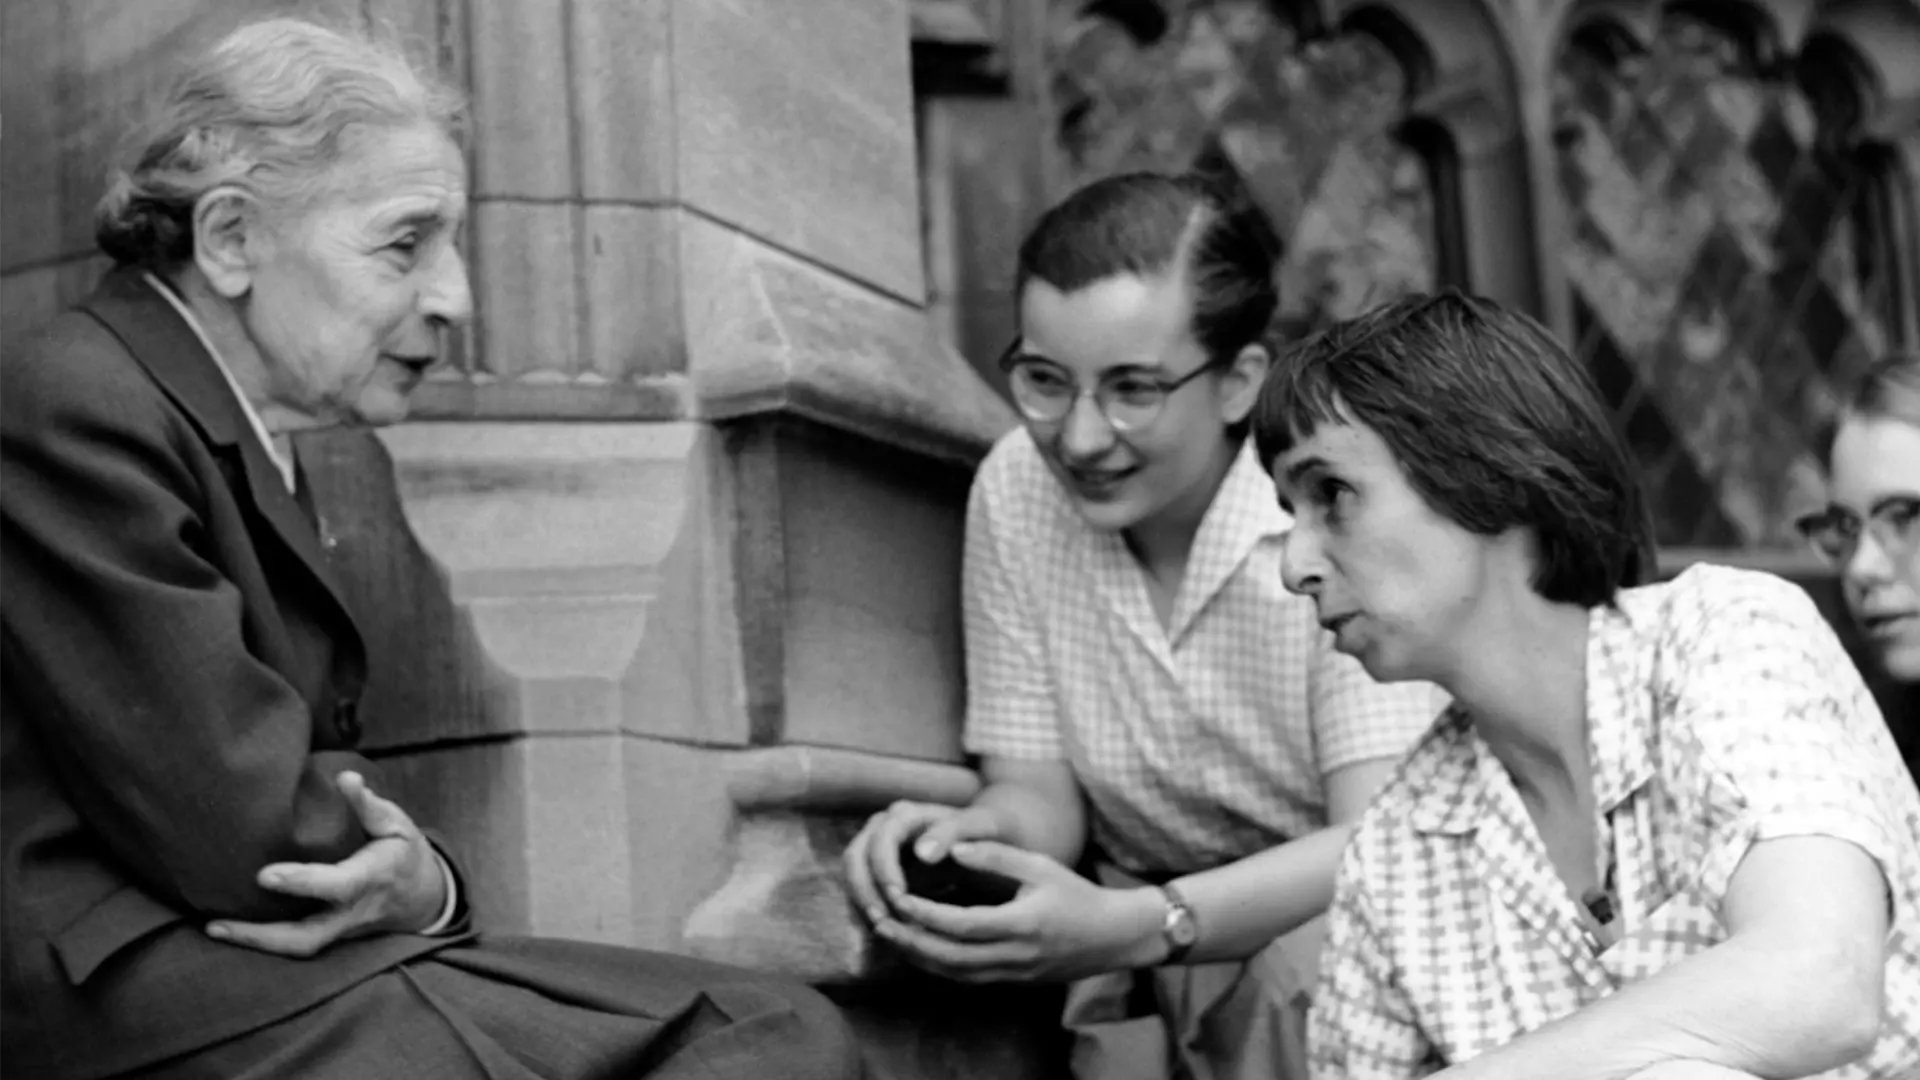 Lise Meitner with students https://commons.wikimedia.org/wiki/File:Chemist_Lise_Meitner_with_students.jpg